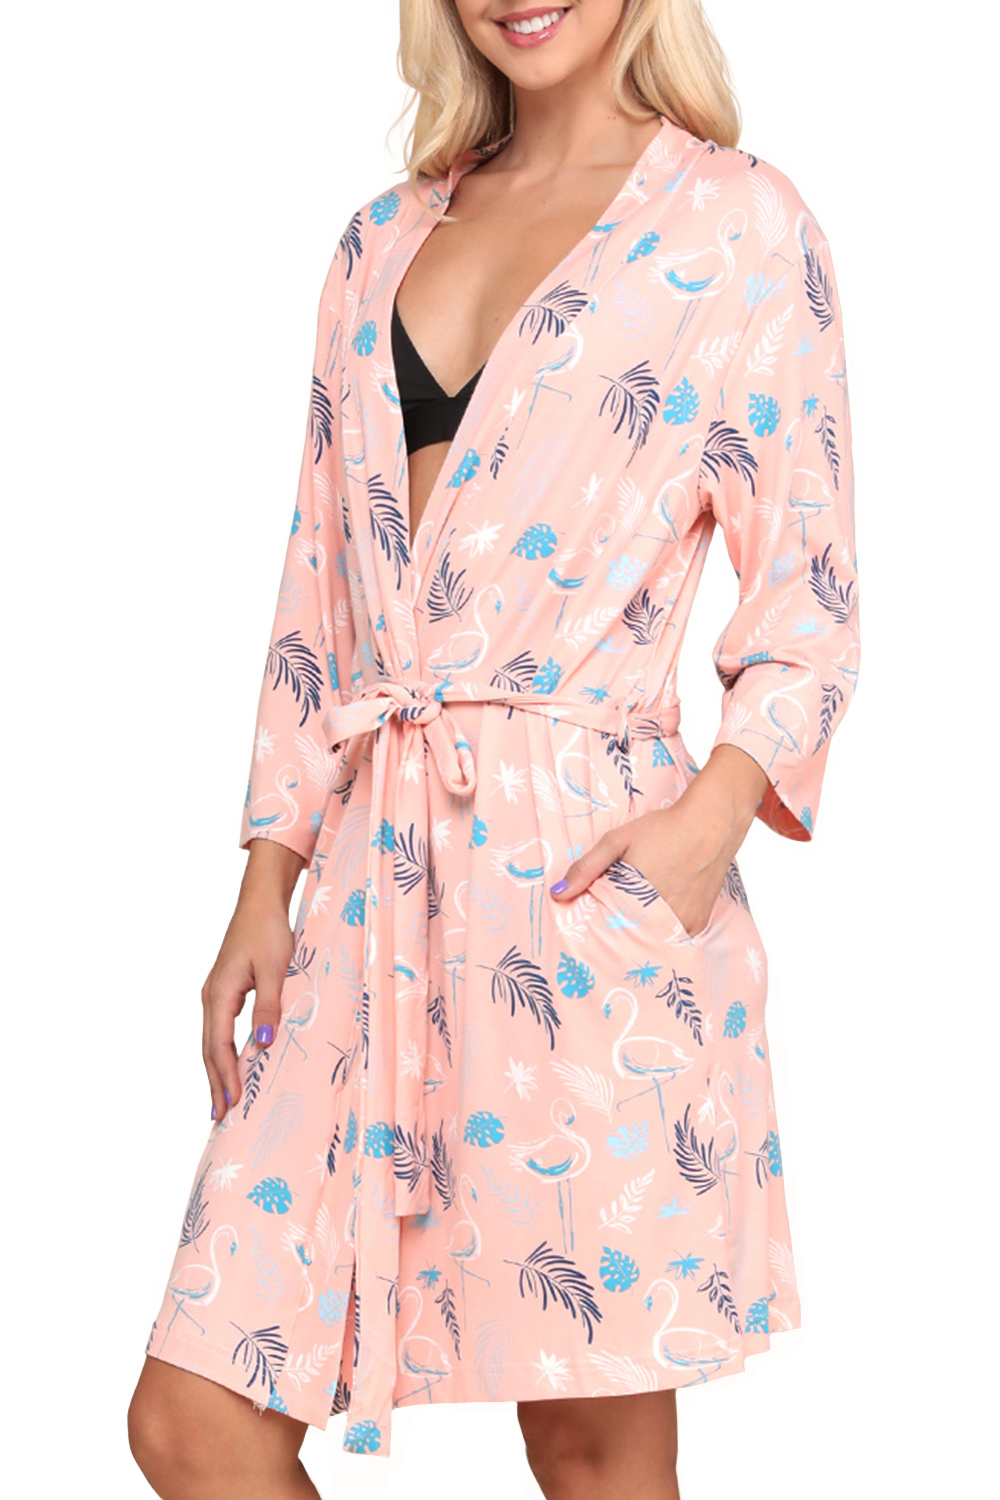 Doublju Women's Kimono Robe Sleepwear Pajama (Plus Size Available) - image 1 of 5